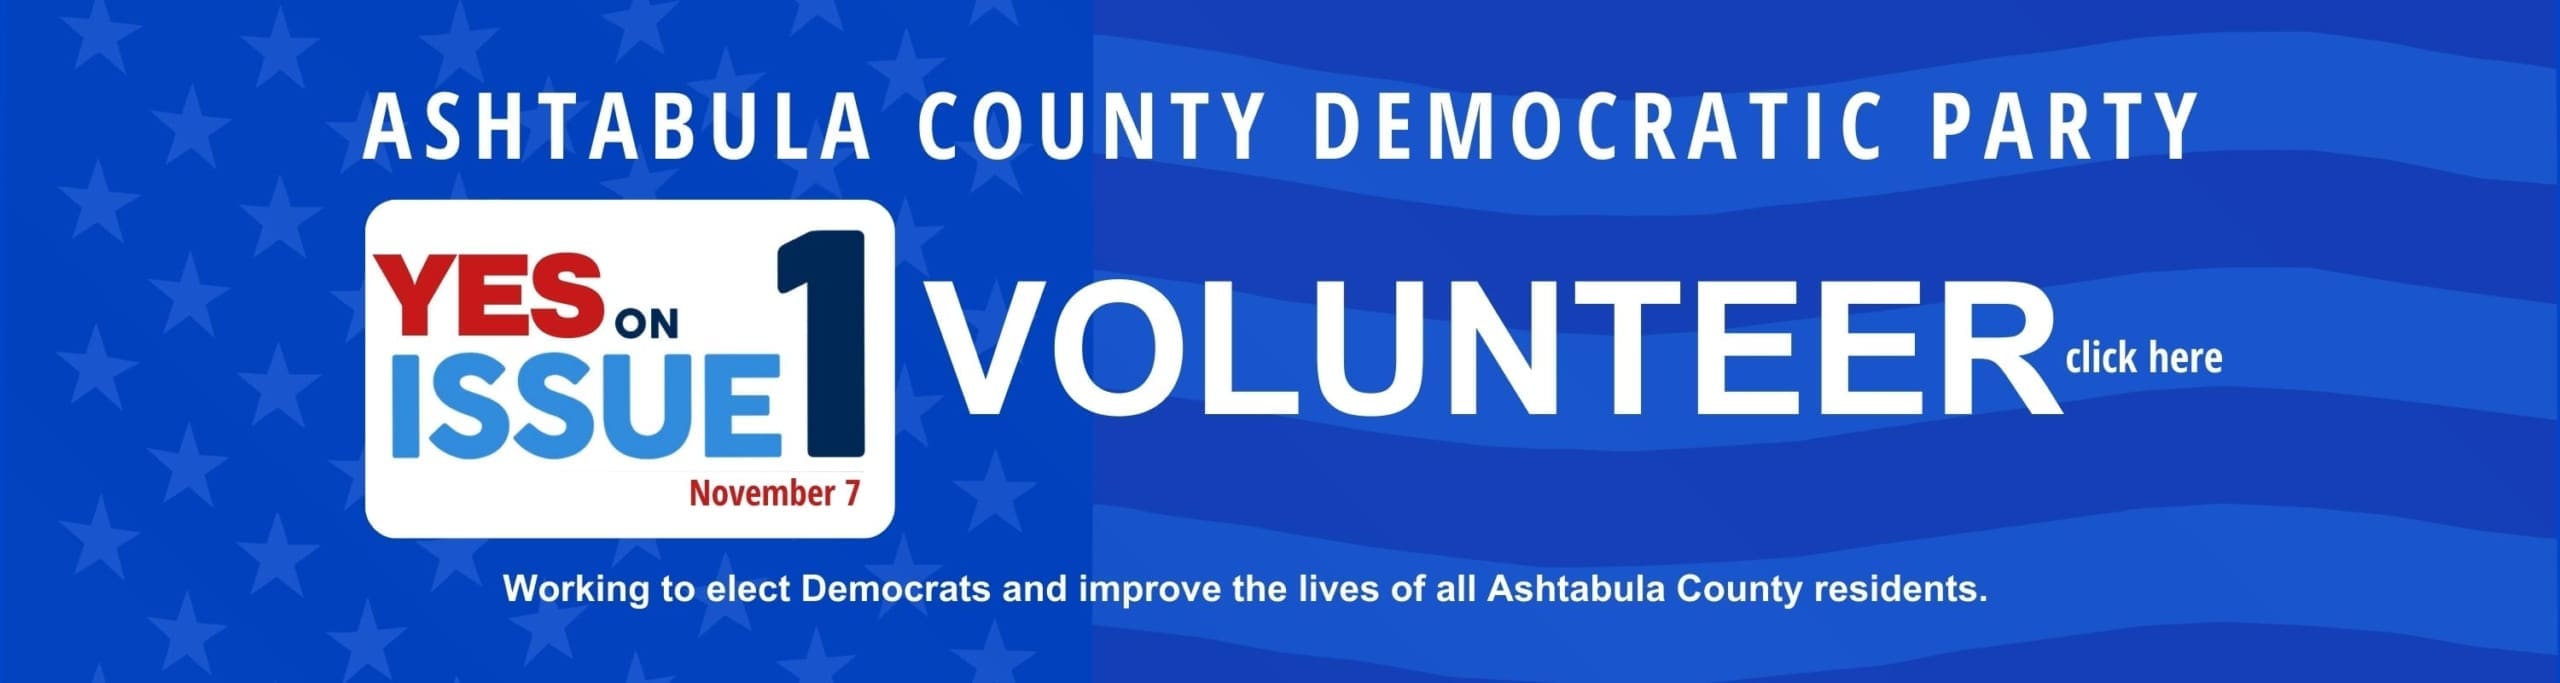 Image of Ashtabula County Democratic Party vote yes on issue 1